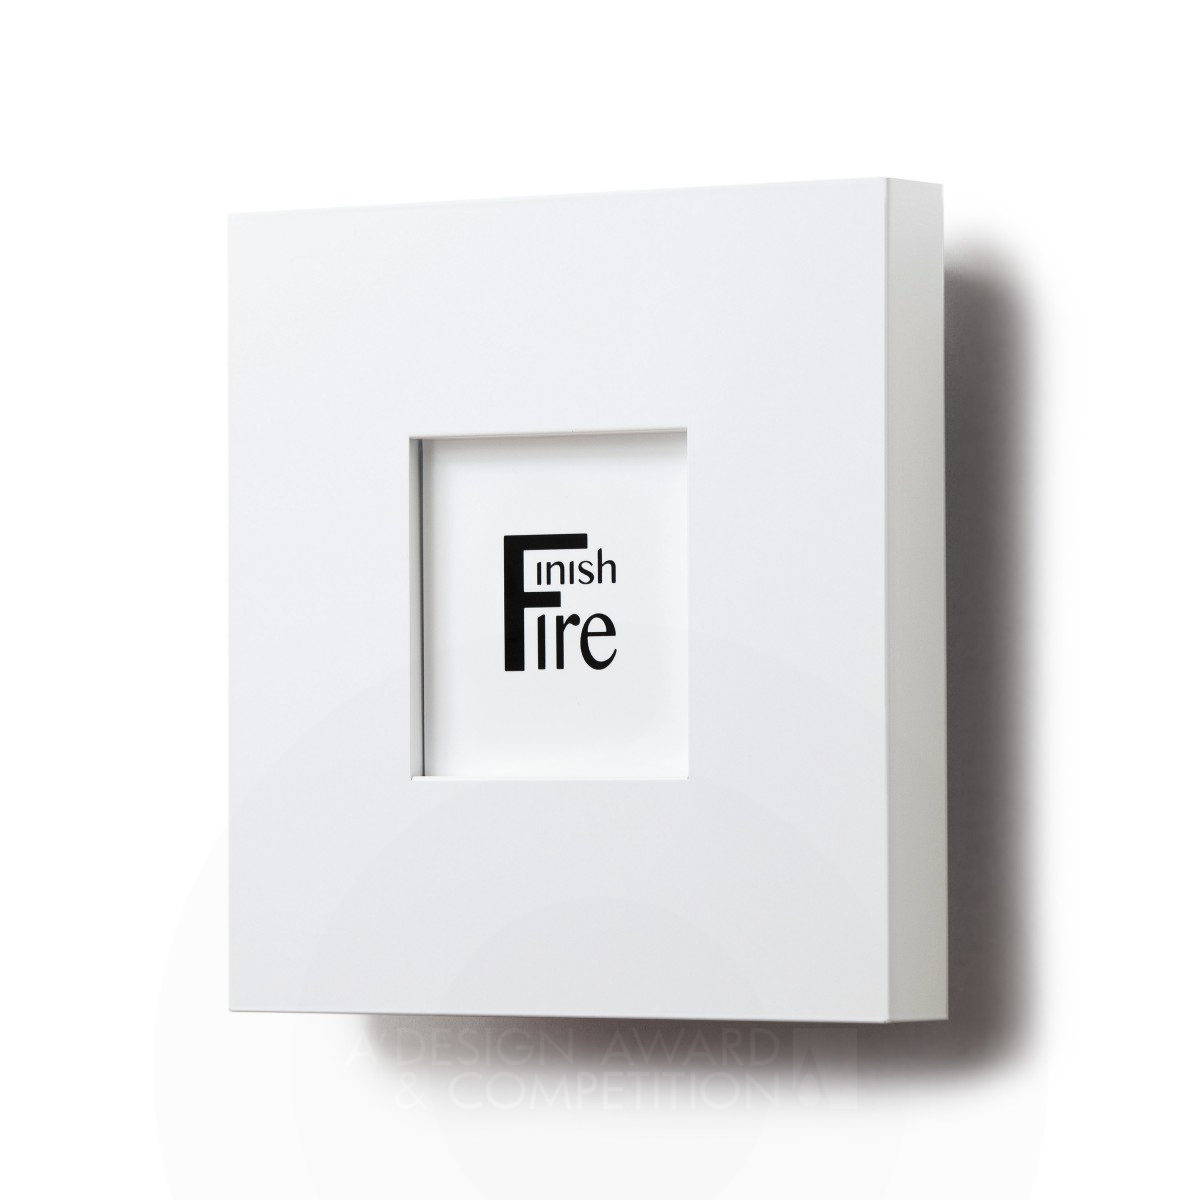 Finishfire <b>Frame covers extinguishing equipment